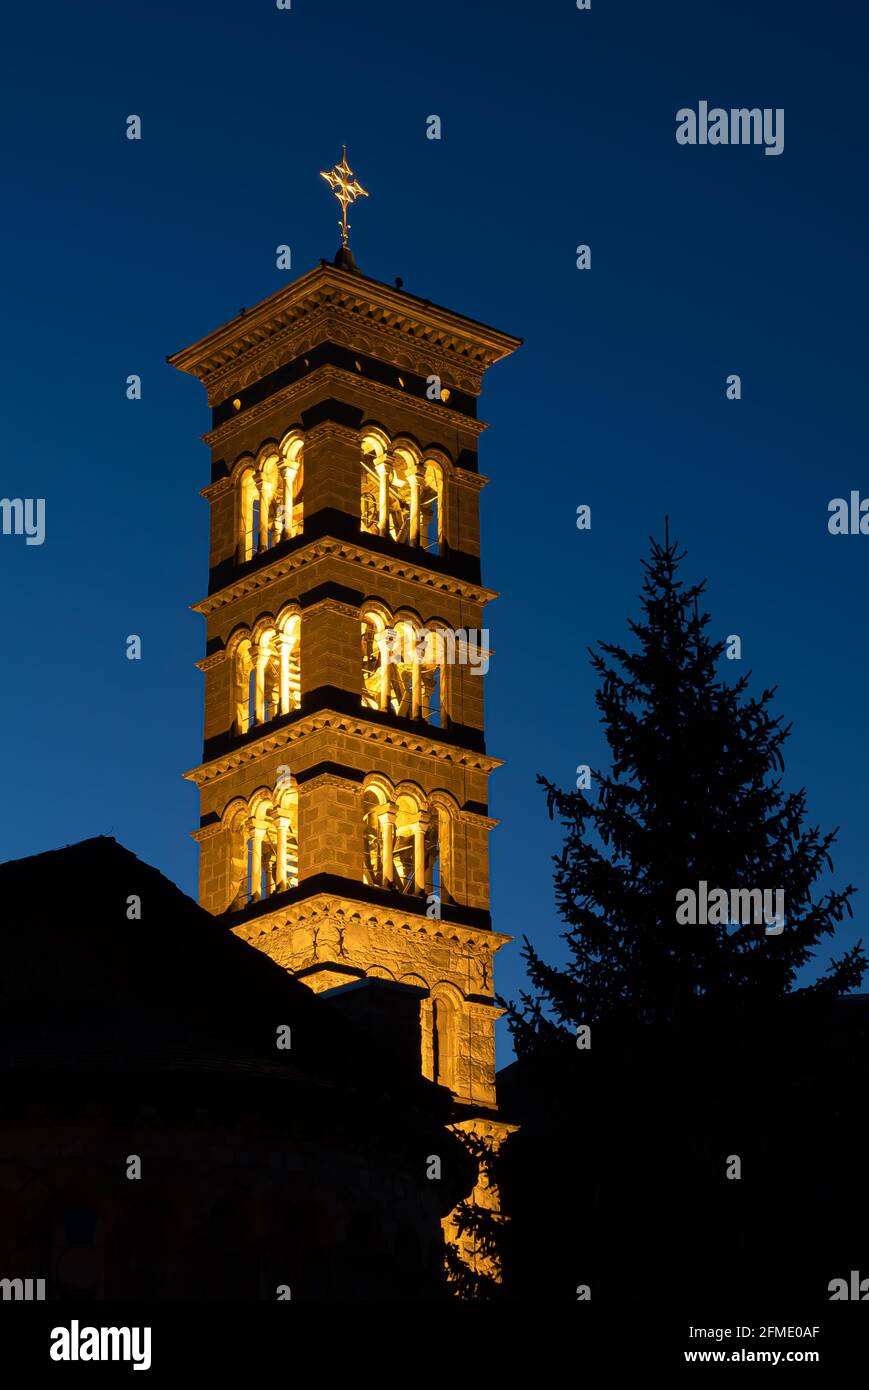 St. Moritz, Switzerland - November 26, 2020: Illuminated bell tower of the catholic church St. Mauritius in the blue hour Stock Photo